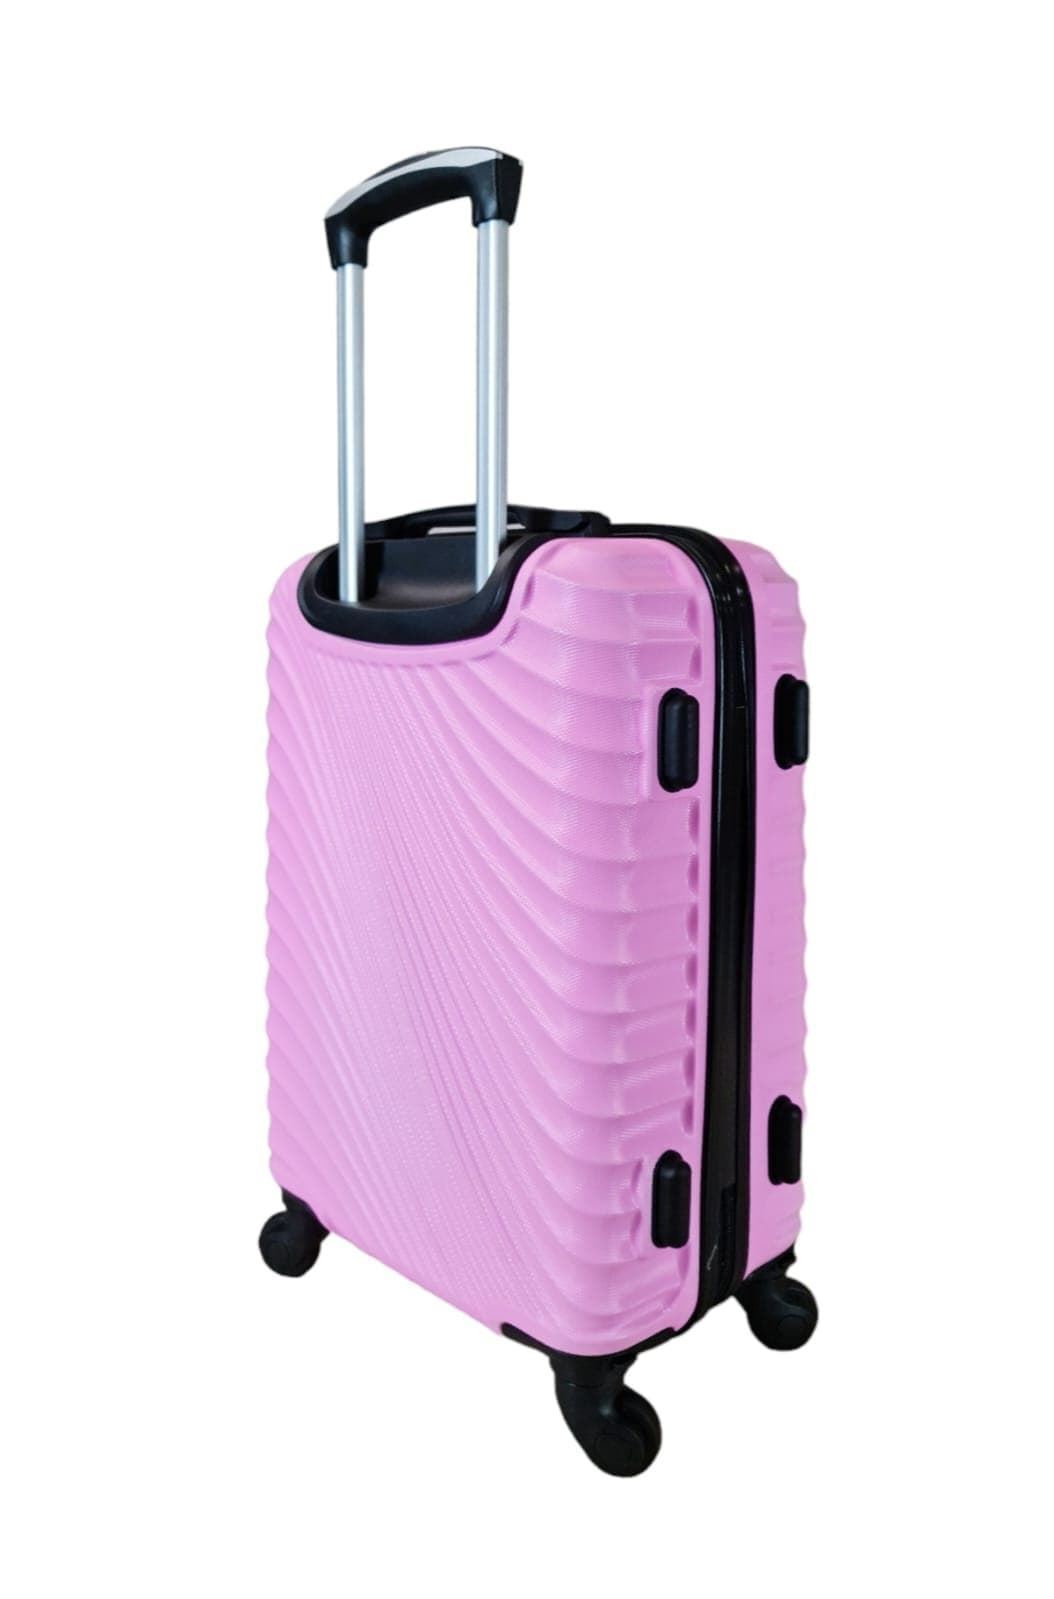 Maleta de Viaje Tamaño Cabina VIP Peso 10 kilos Material ABS Barata Medidas 55x40x20 color Rosa Barbie - Imagen 5